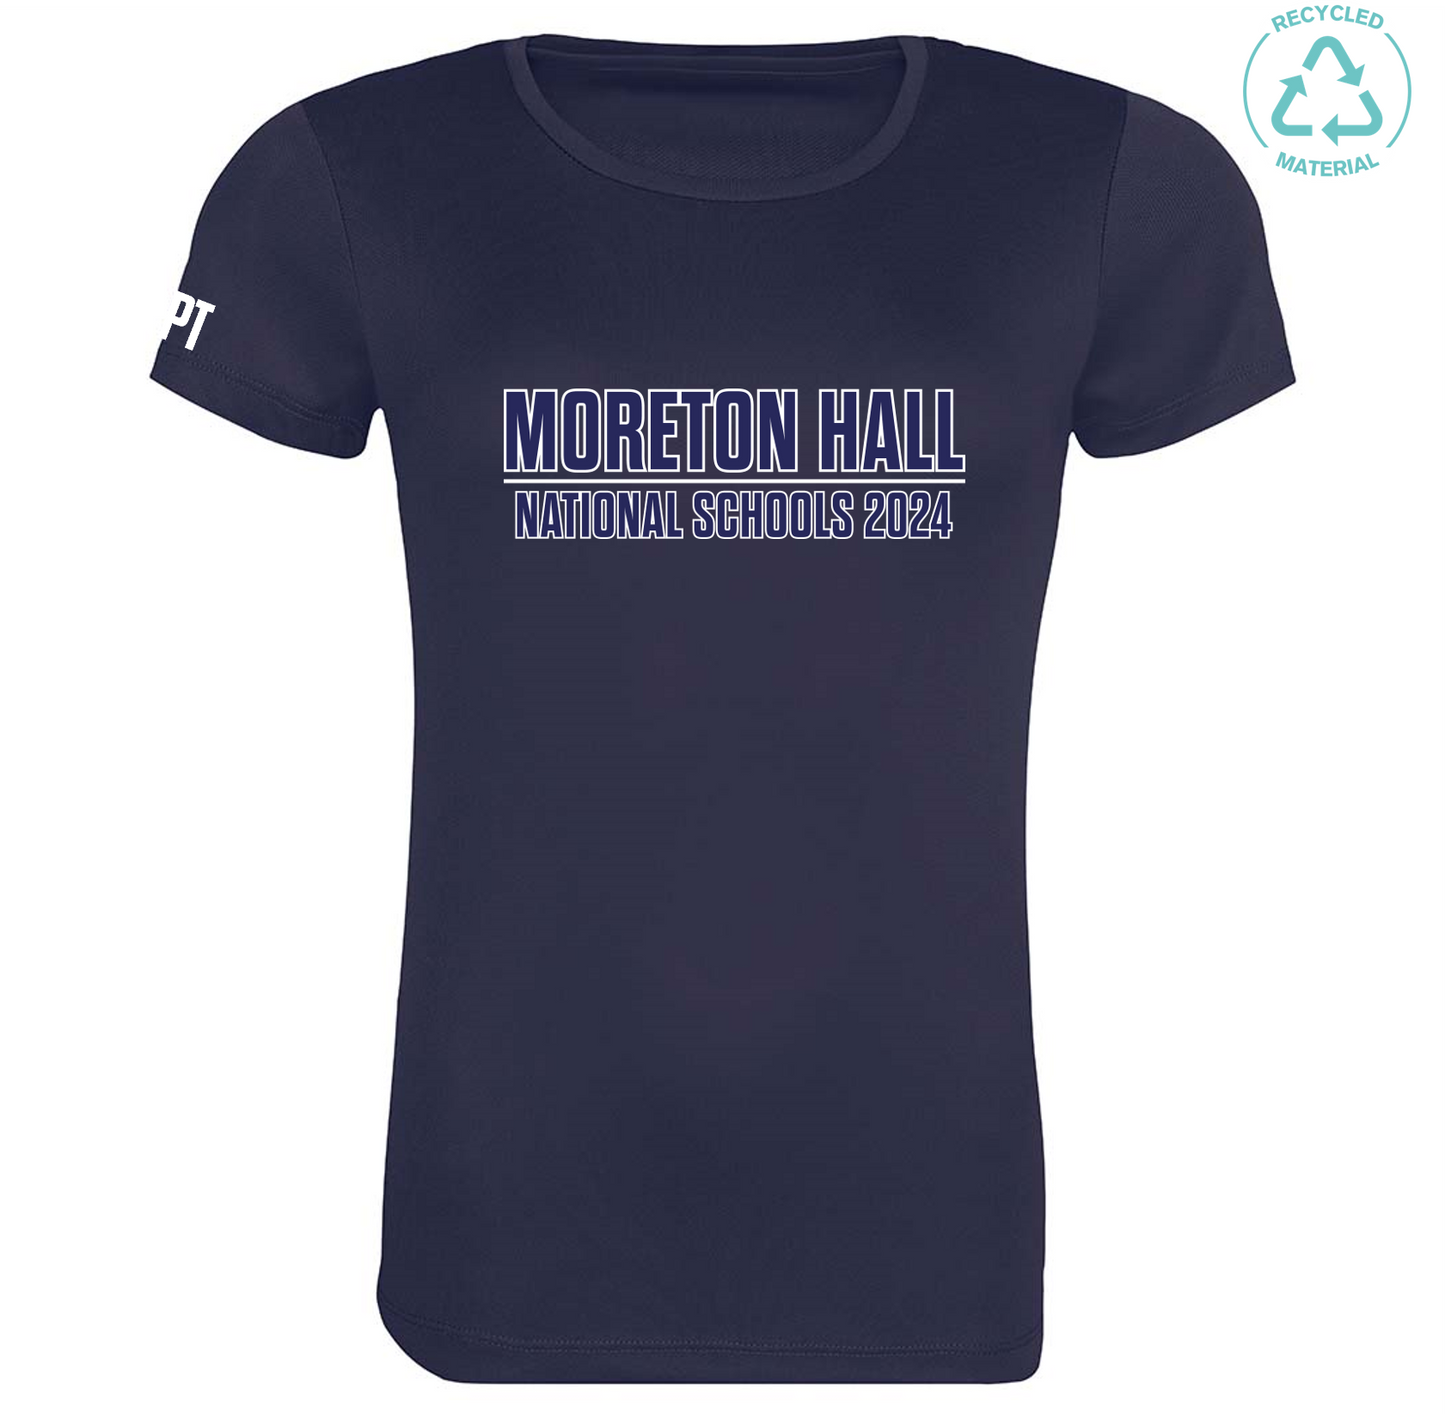 Moreton Hall Short Sleeve Tech T Shirt